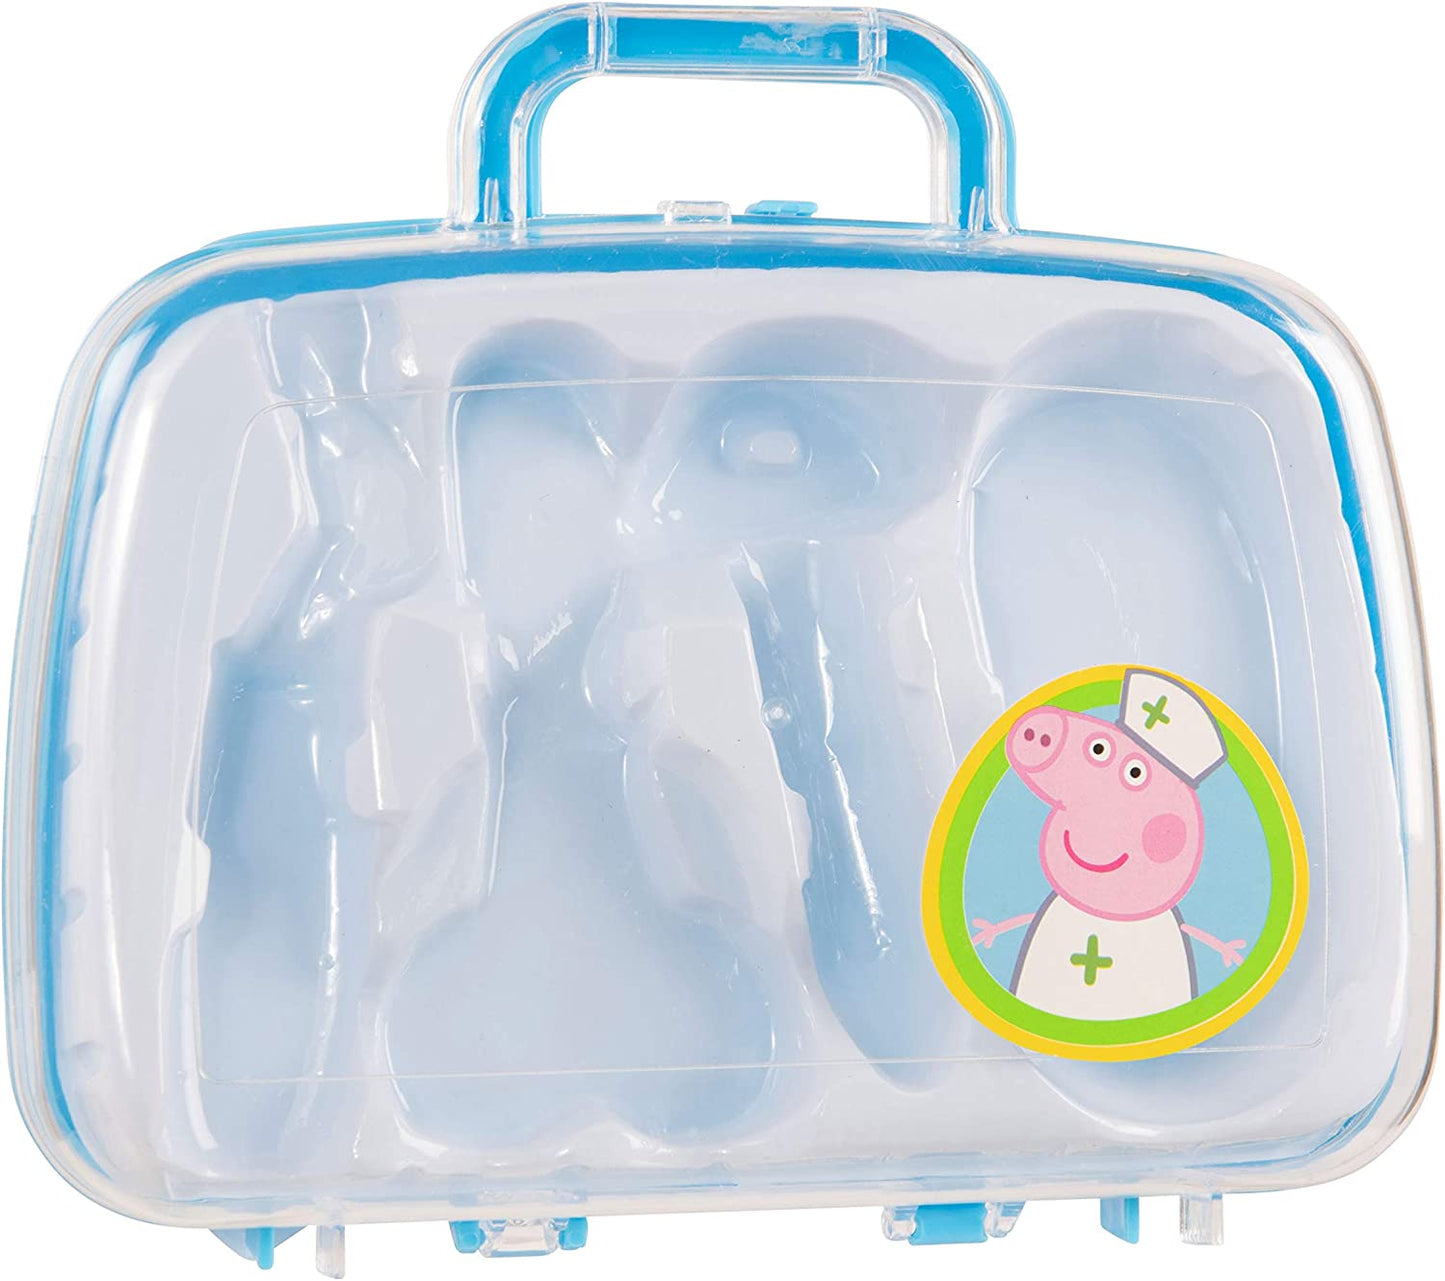 Peppa Pig Medical case Toy